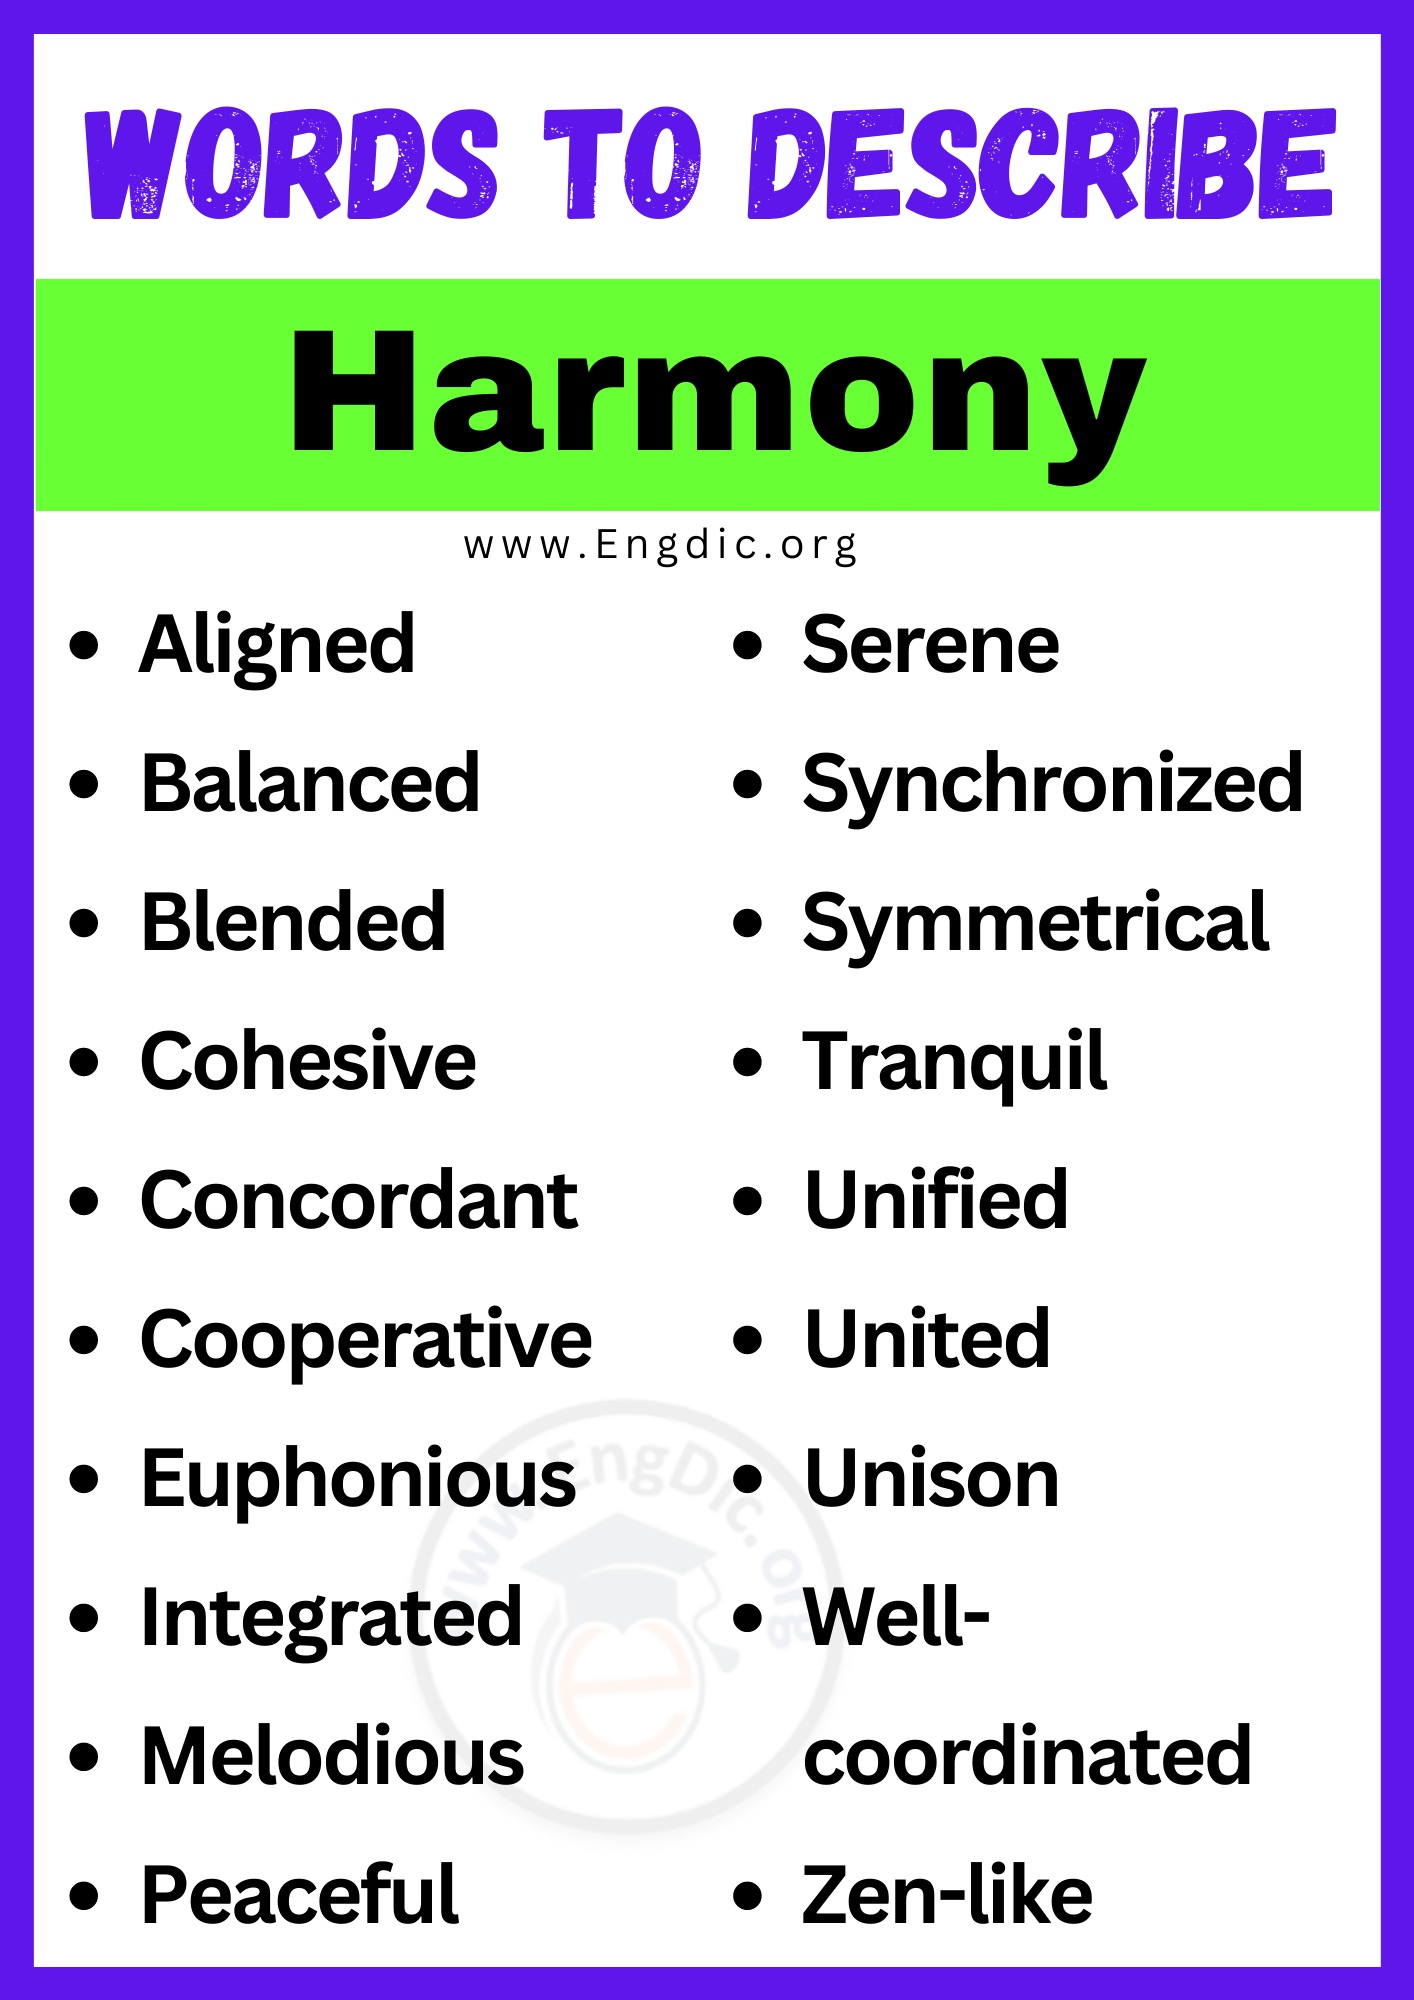 Words to Describe Harmony